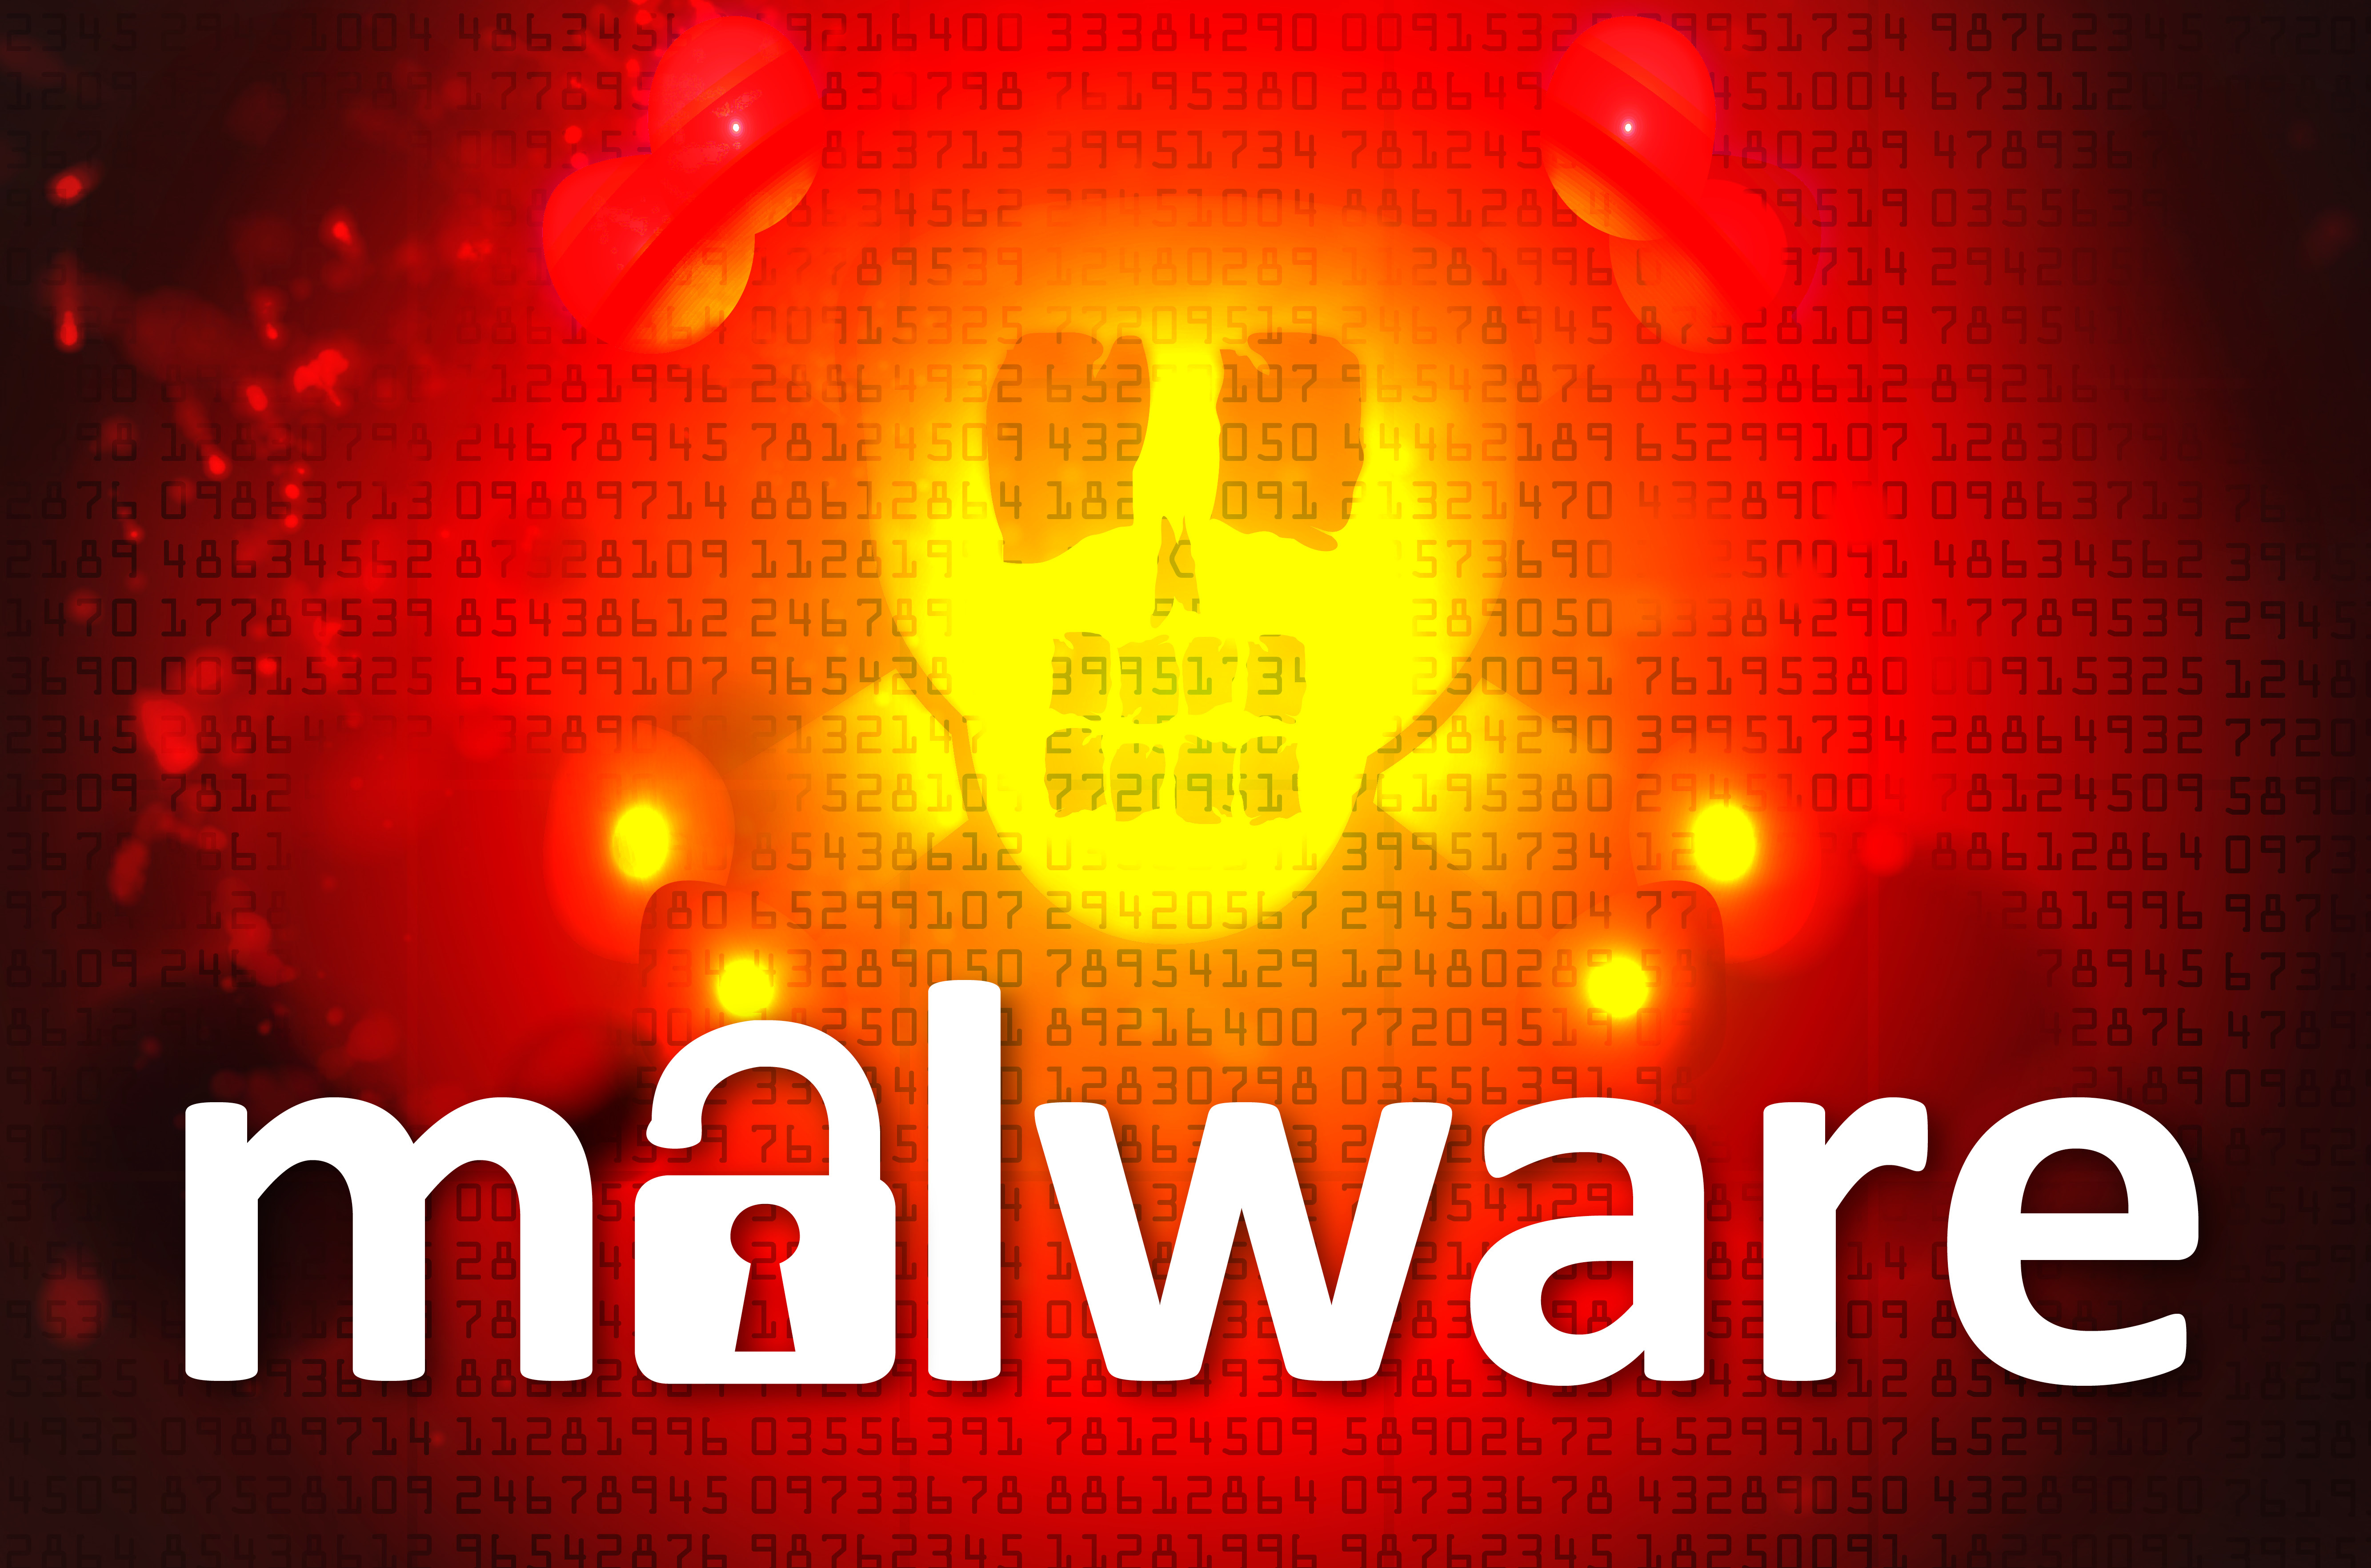 best anti malware 2020